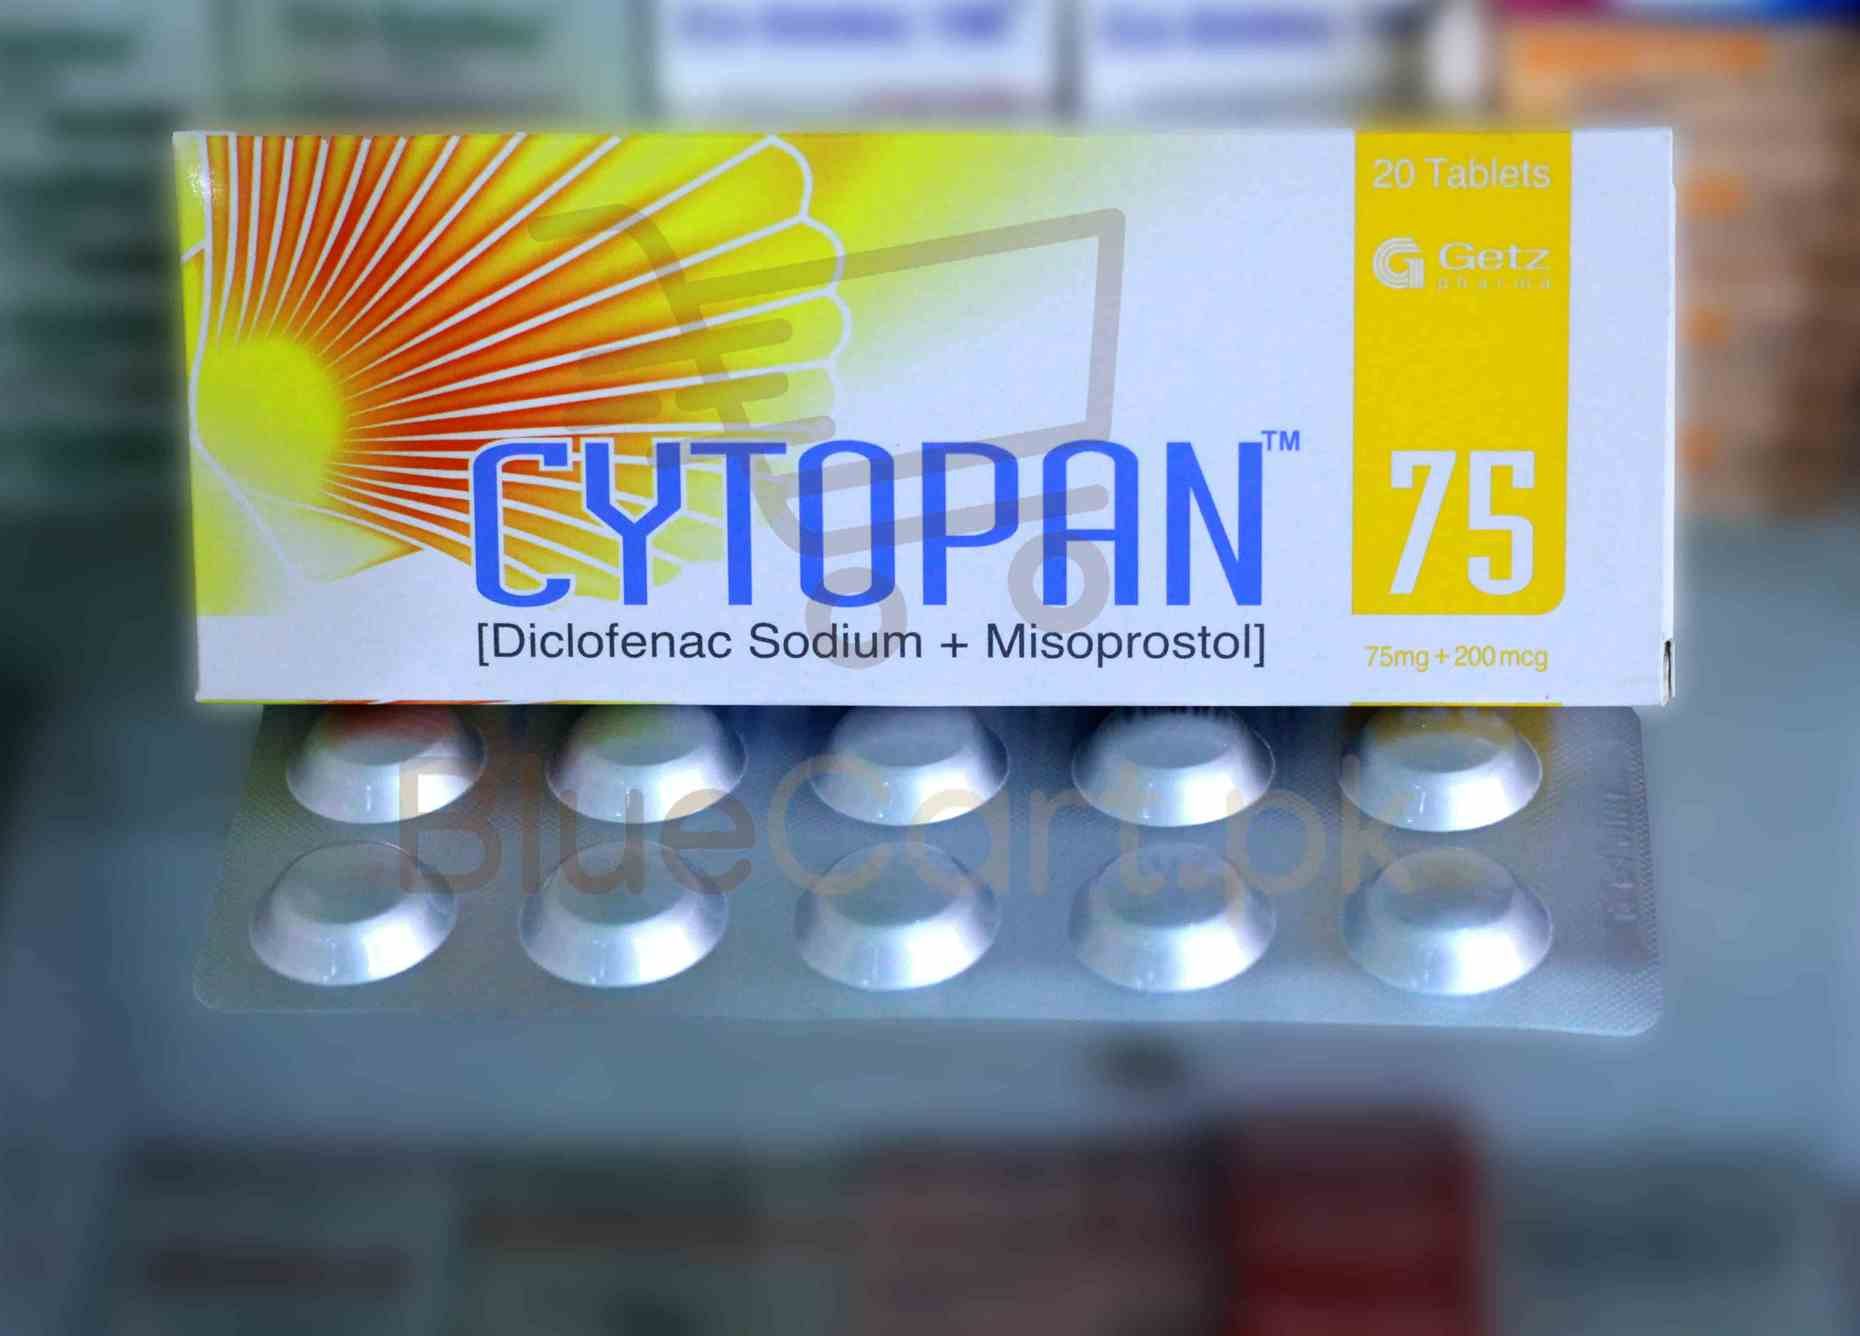 Cytopan Tablet 75mg